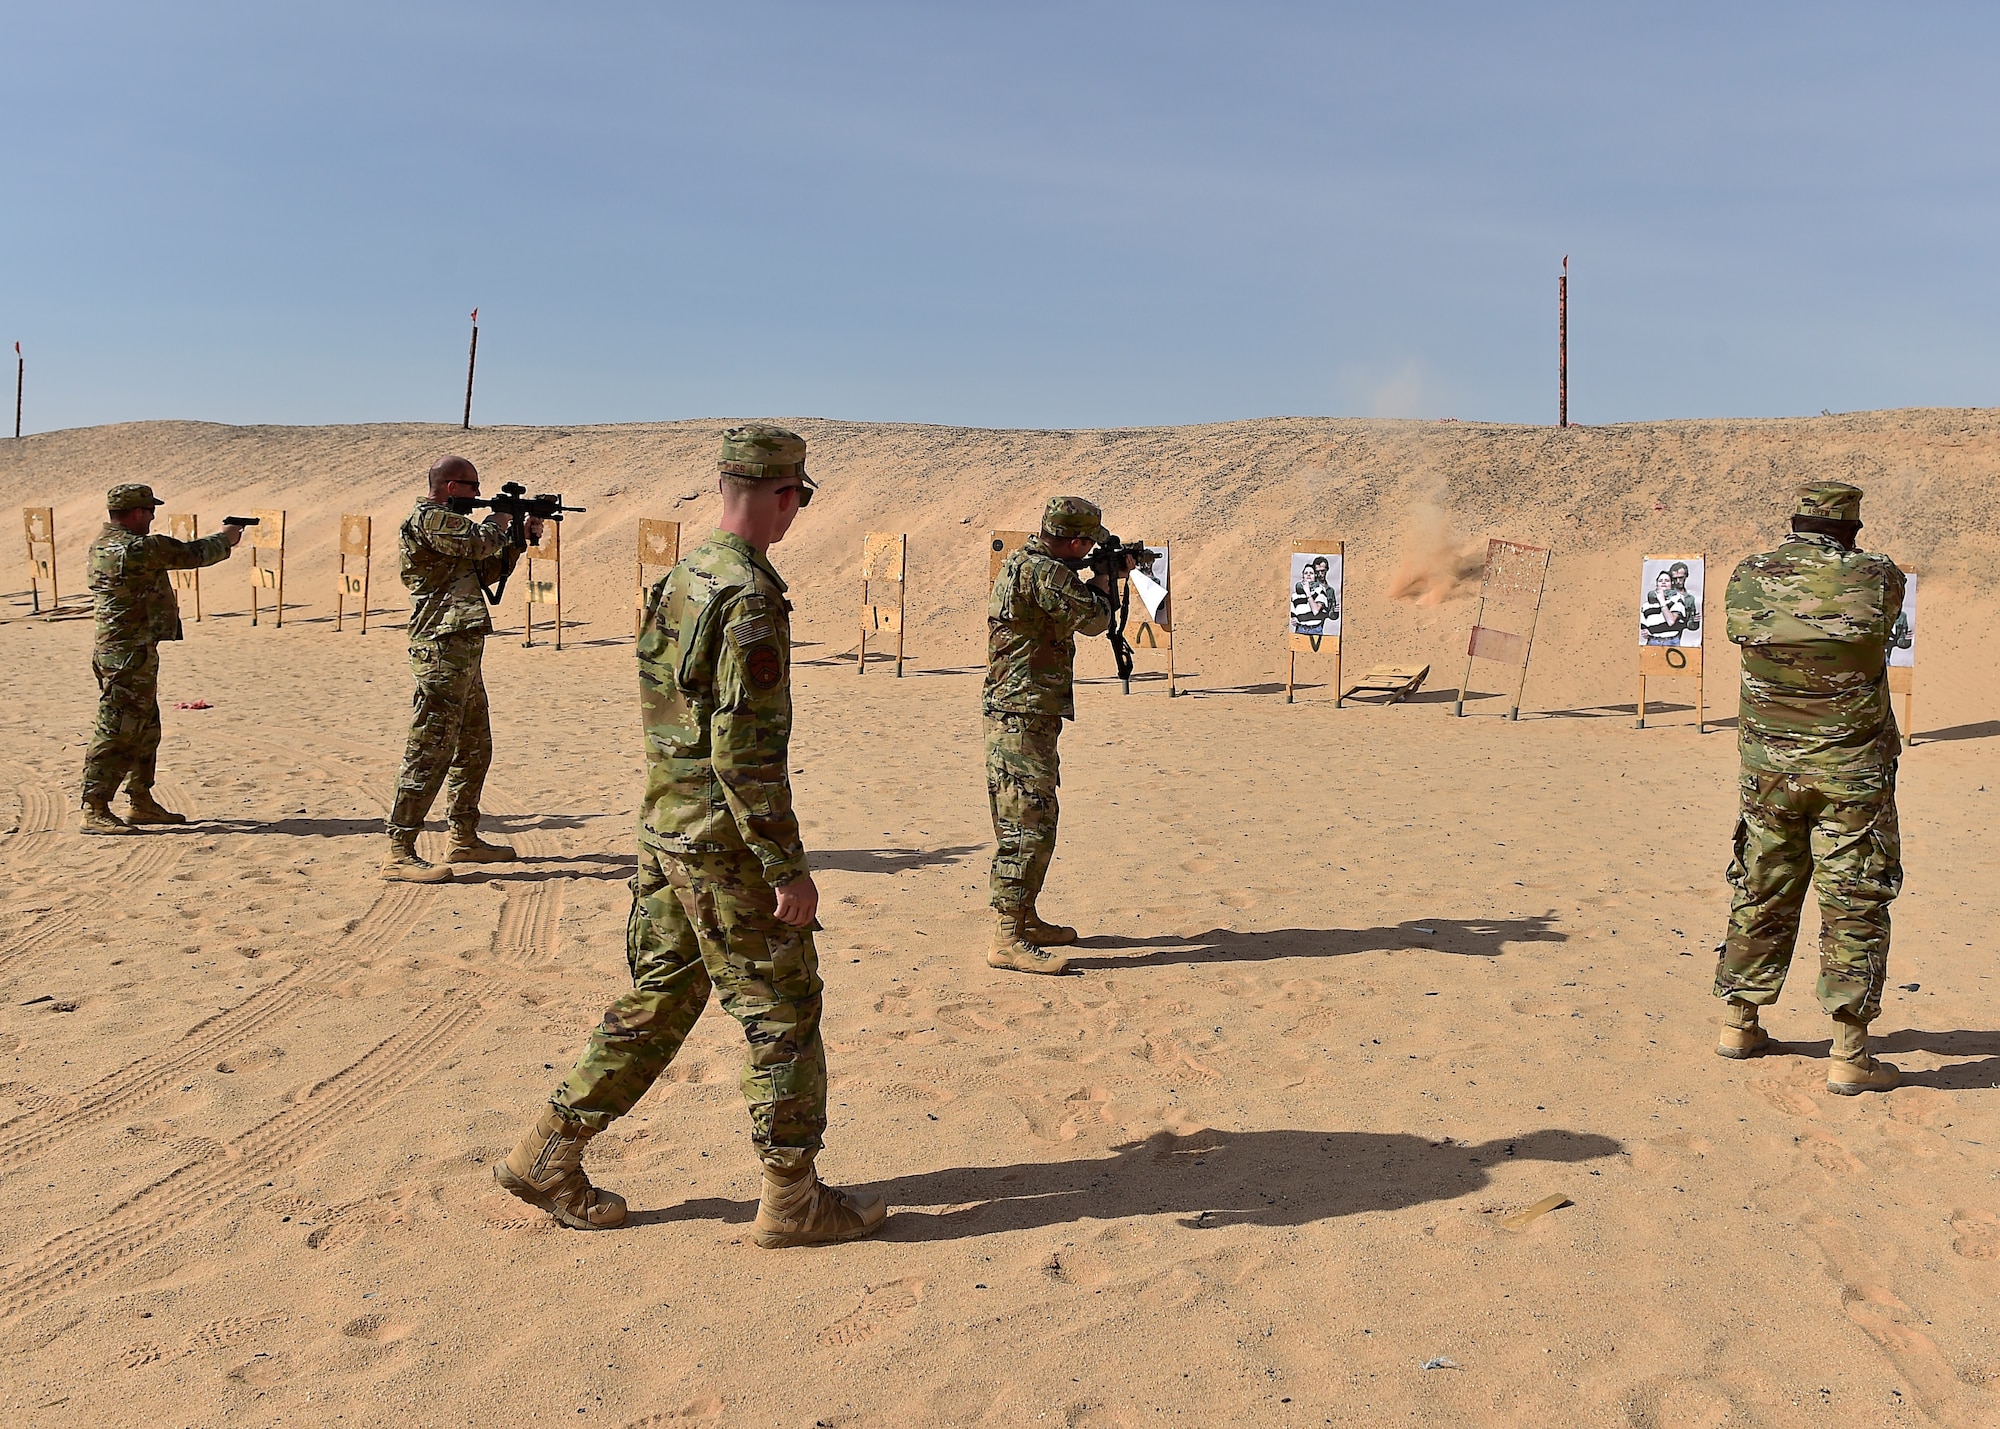 378 AEW leadership visit security forces down range